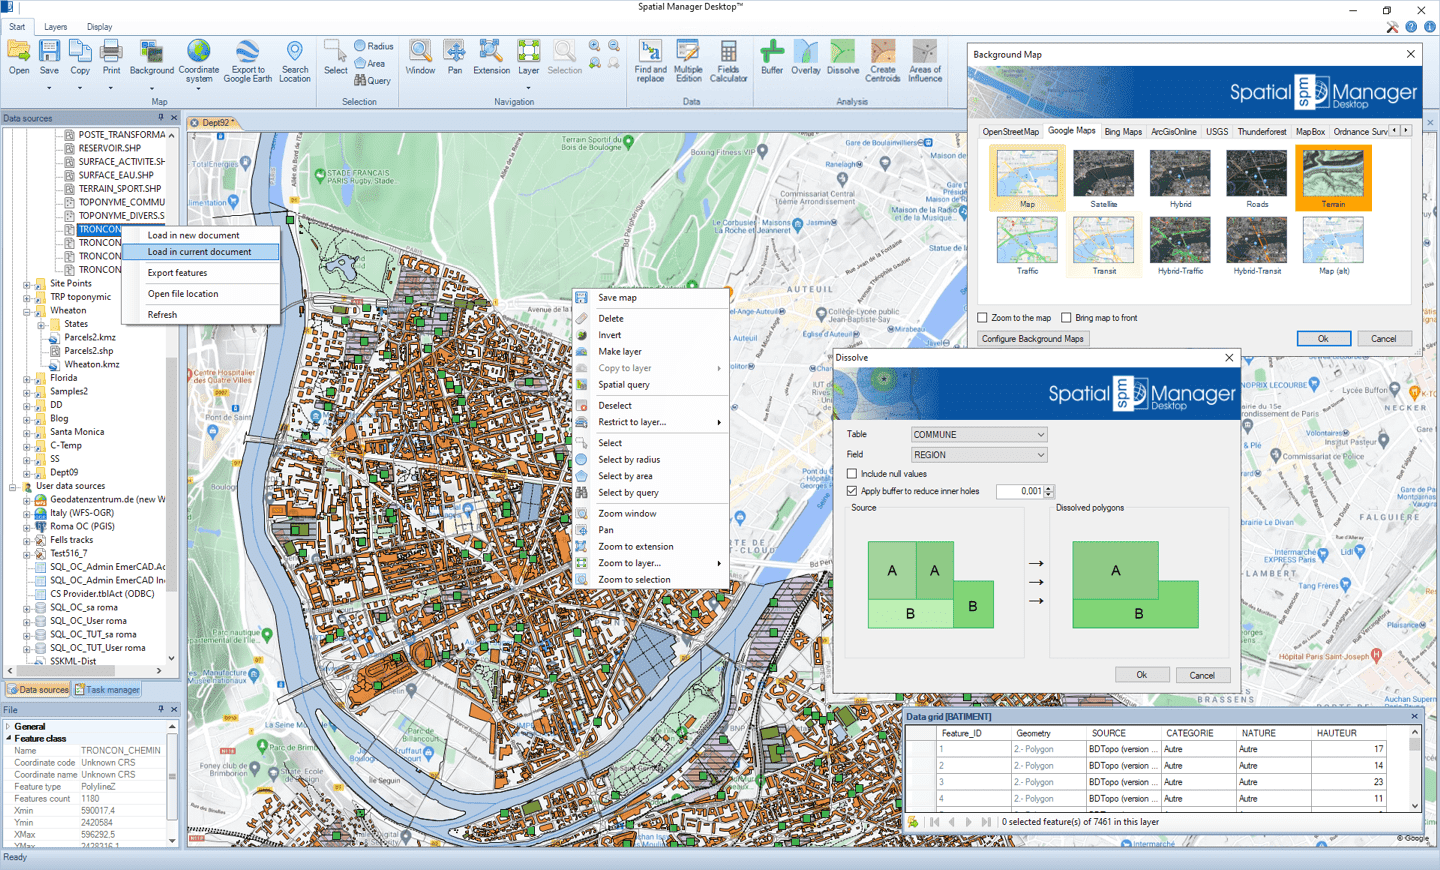 Download Portugal GIS Data Formats- Shp, KML, GeoJSON, CSV. 